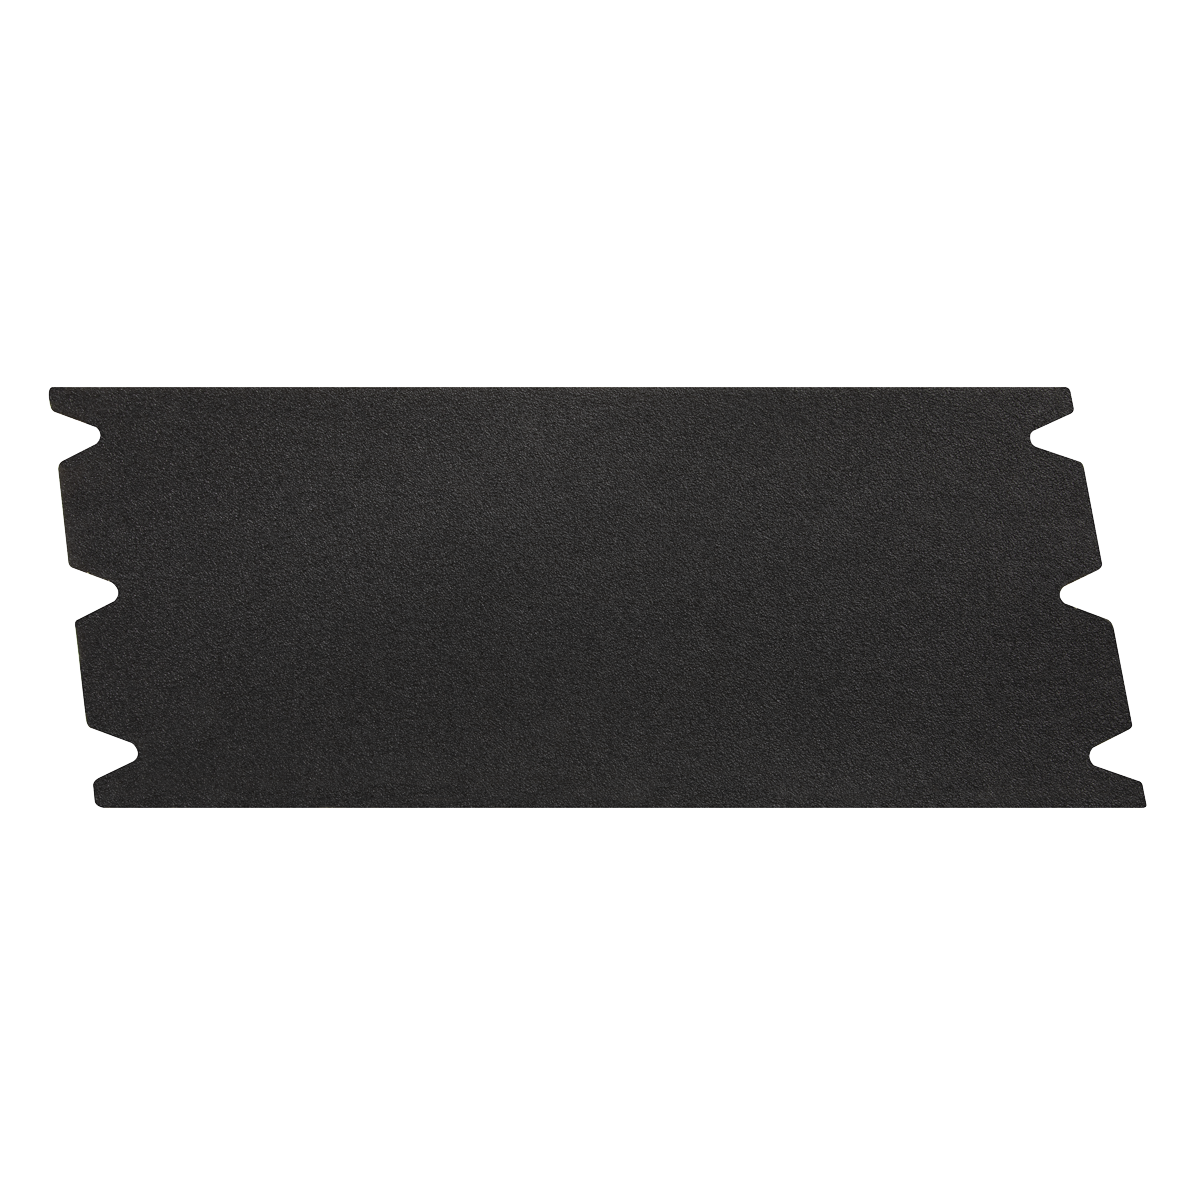 Sealey Floor Sanding Sheet 205 x 470mm 40Grit - Pack of 25 DU840EM